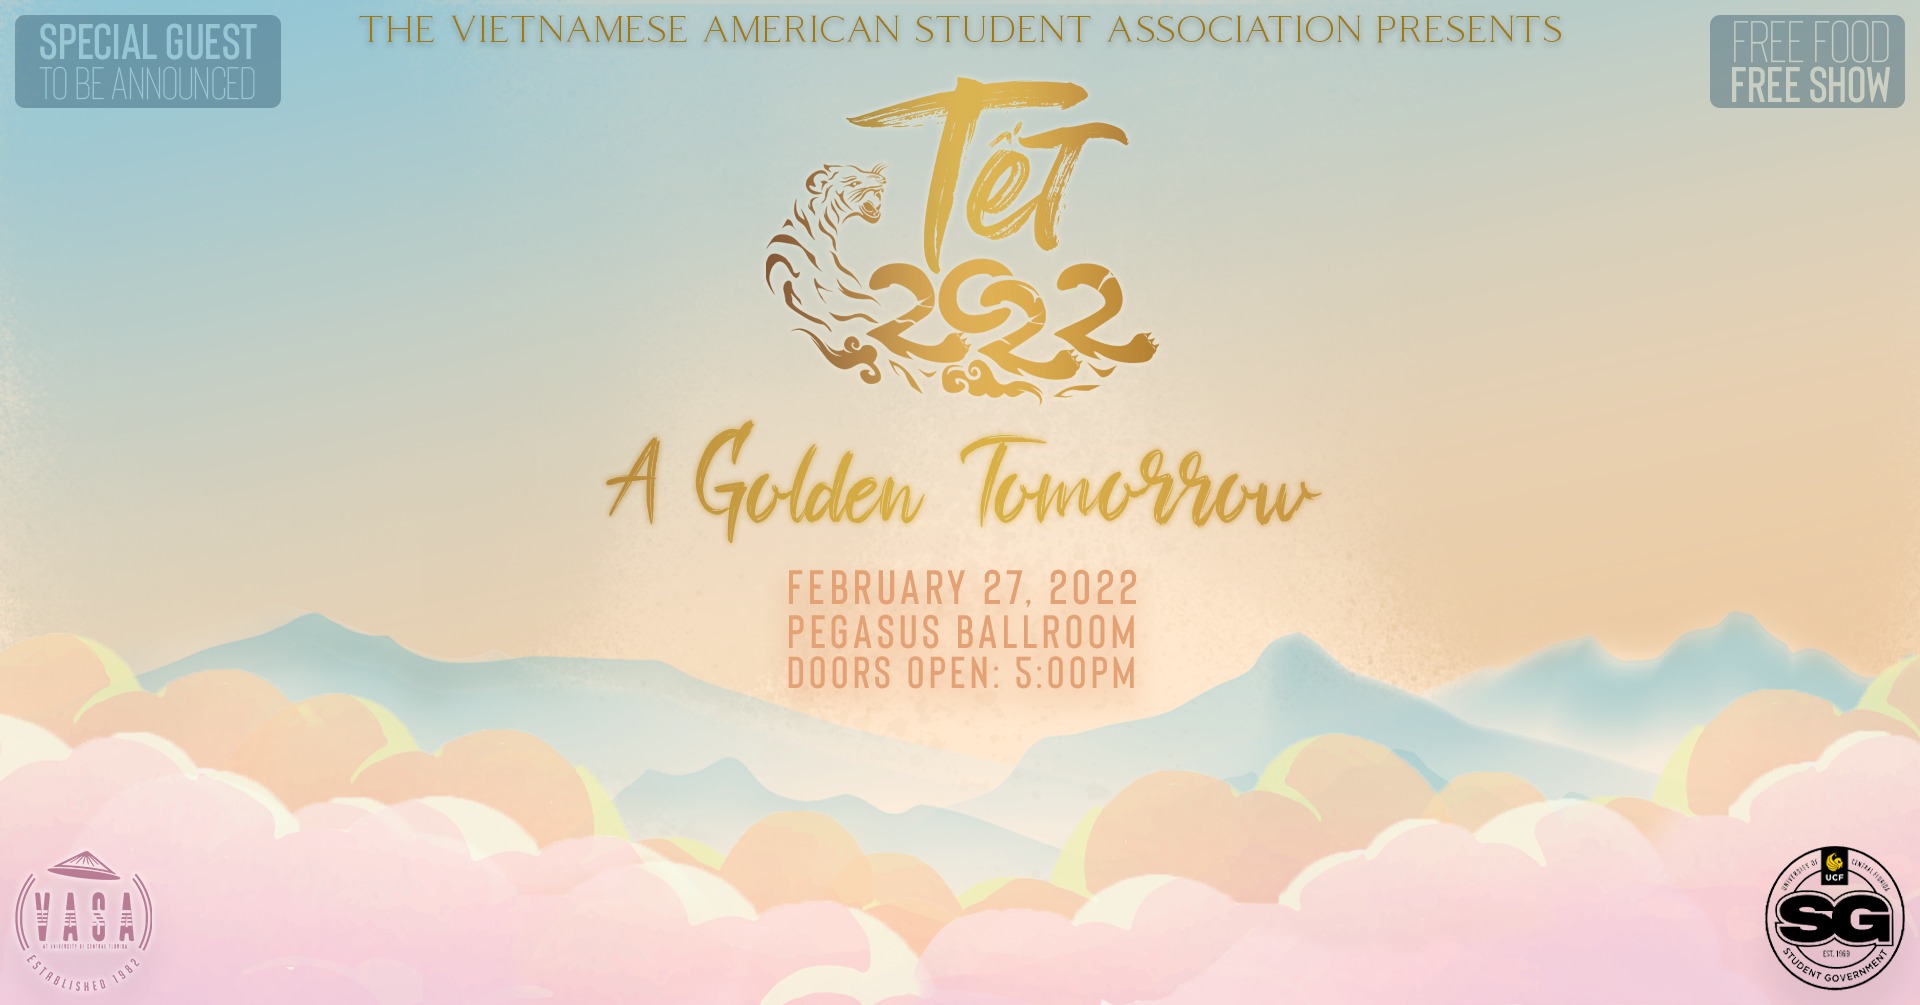 VASA Presents: Tết Showcase - A Golden Tomorrow